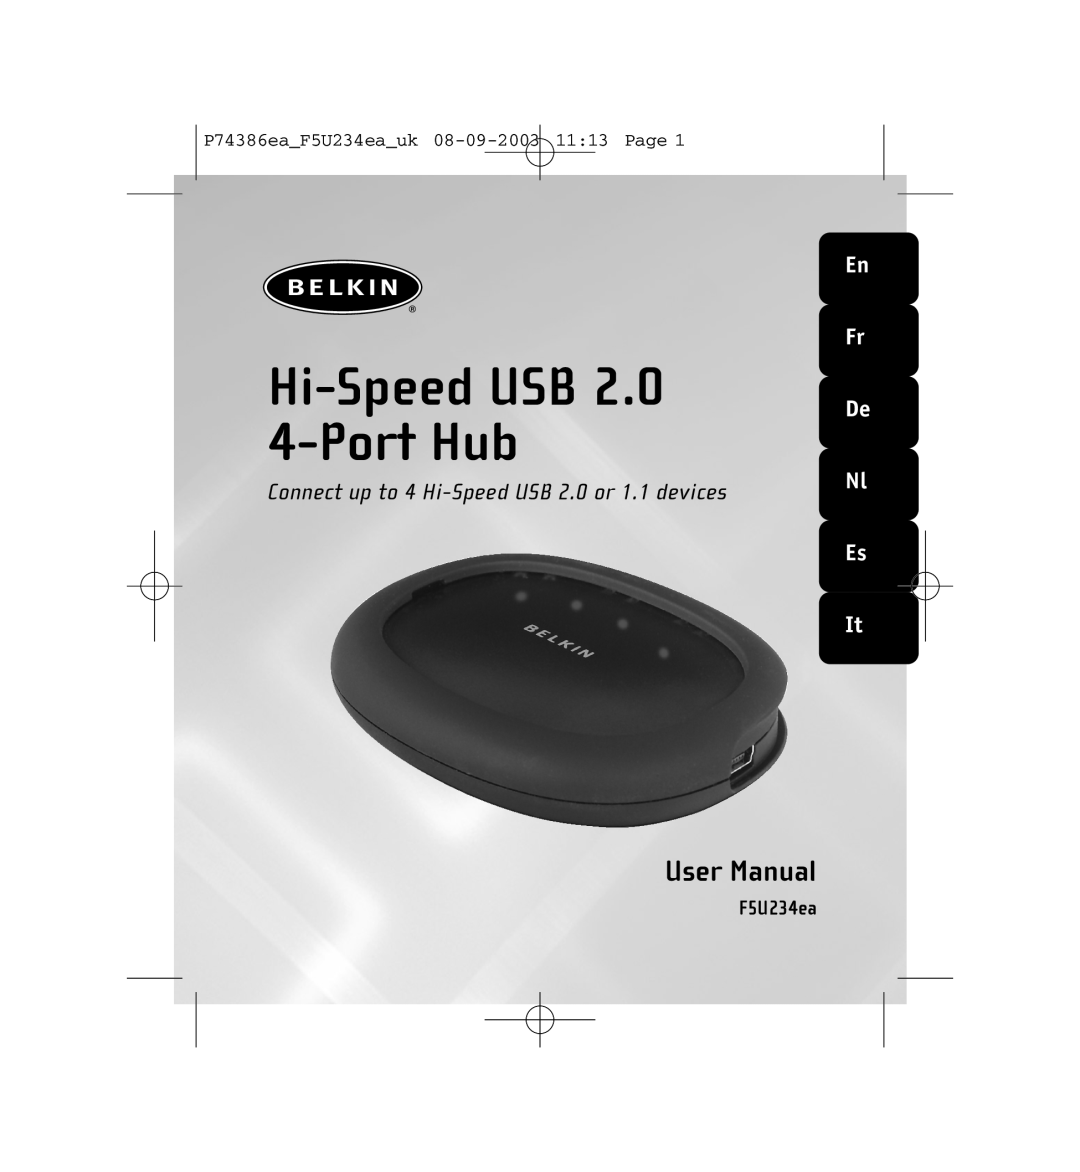 Belkin FSU234ea user manual En Fr, P74386eaF5U234eauk 08-09-2003 1113 Page, Hi-Speed USB 2.0 4-Port Hub, User Manual 